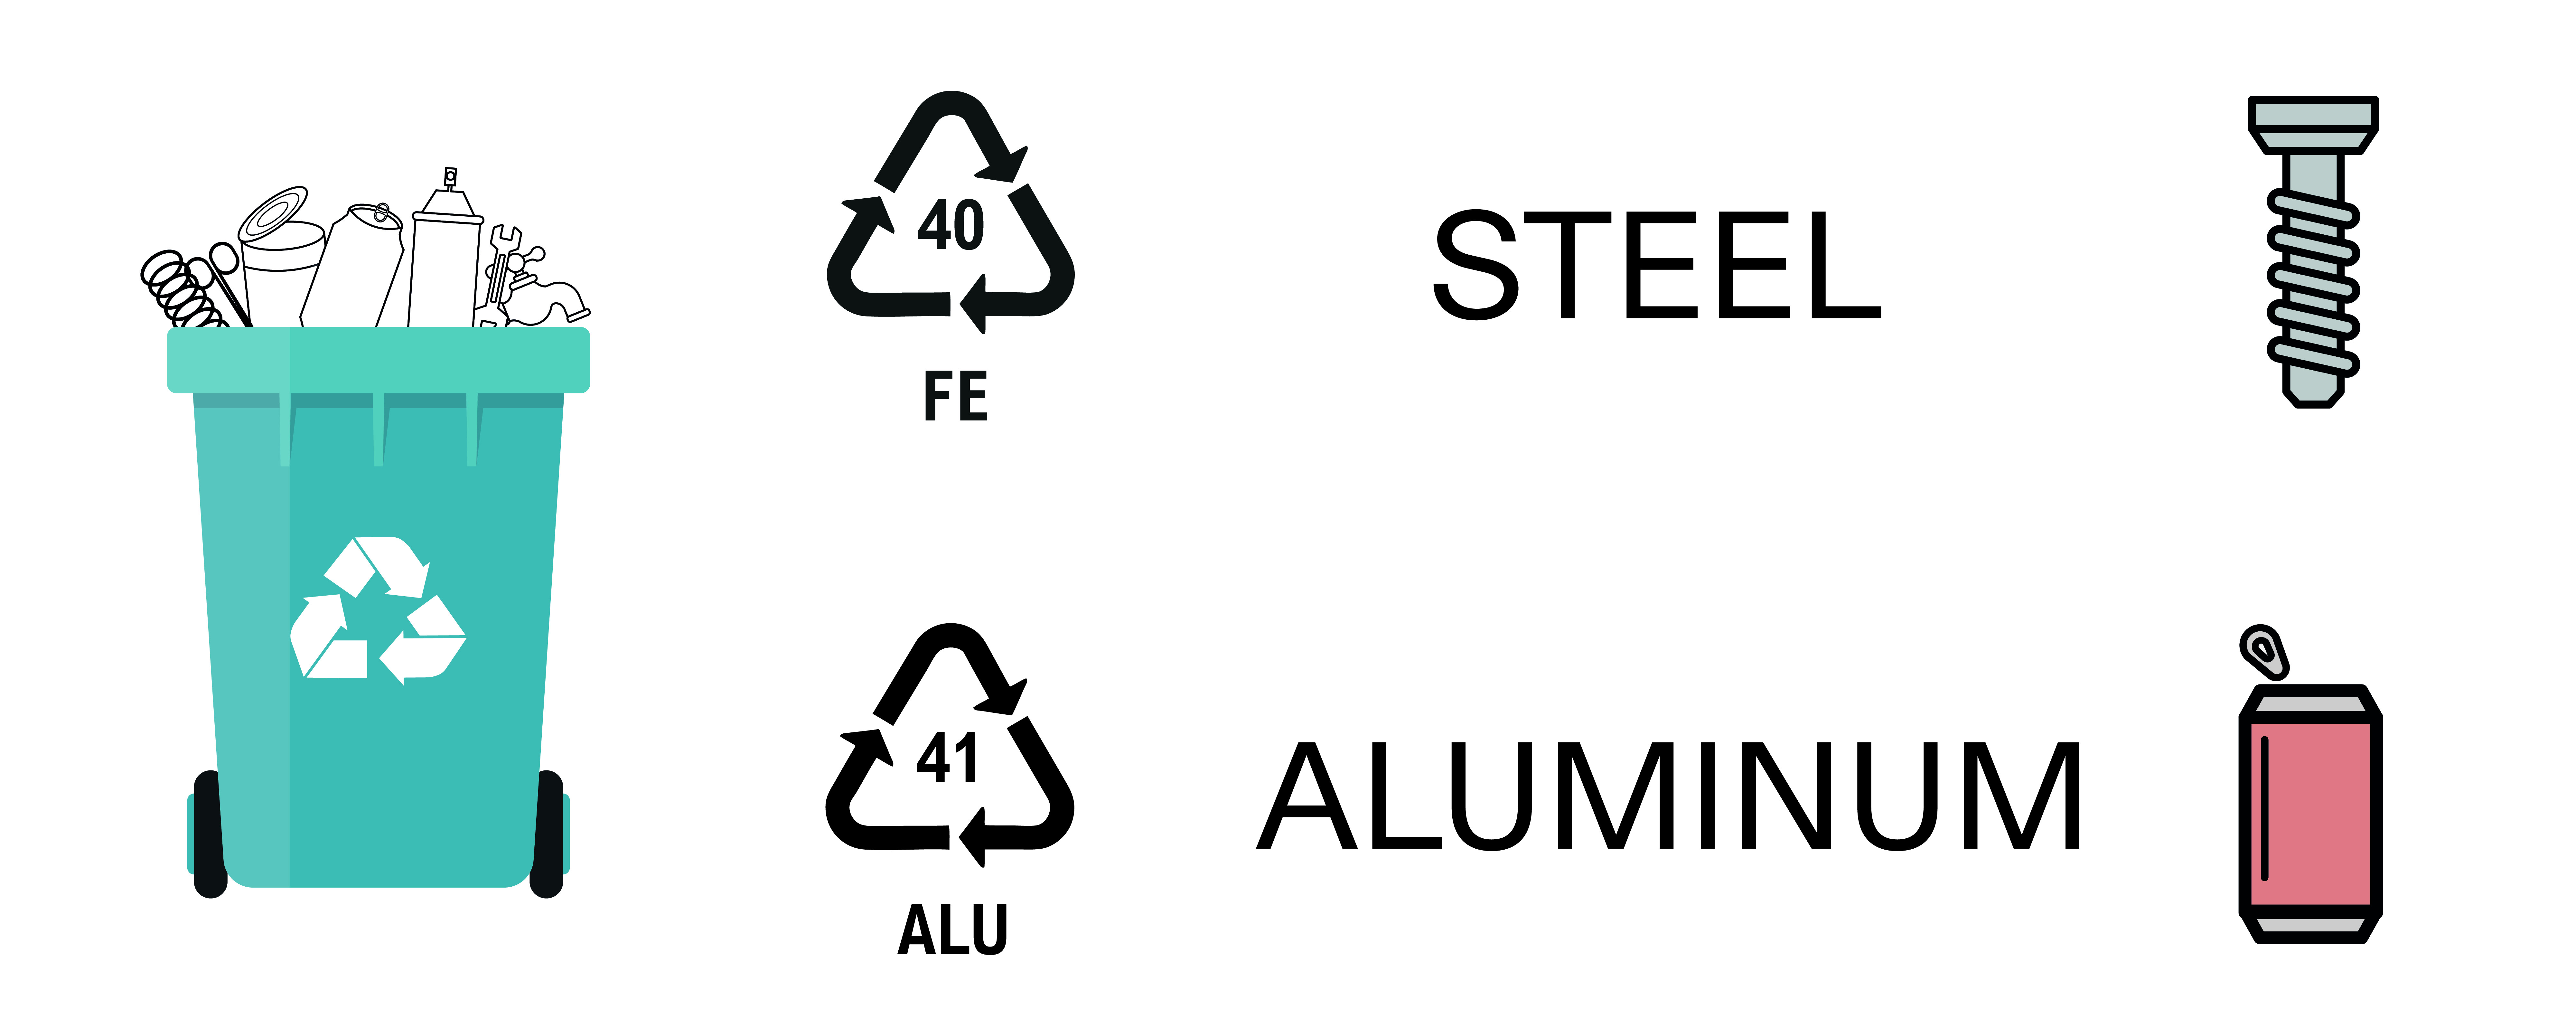 ALLUMINIO_aluminio-acciaio_EN.jpg